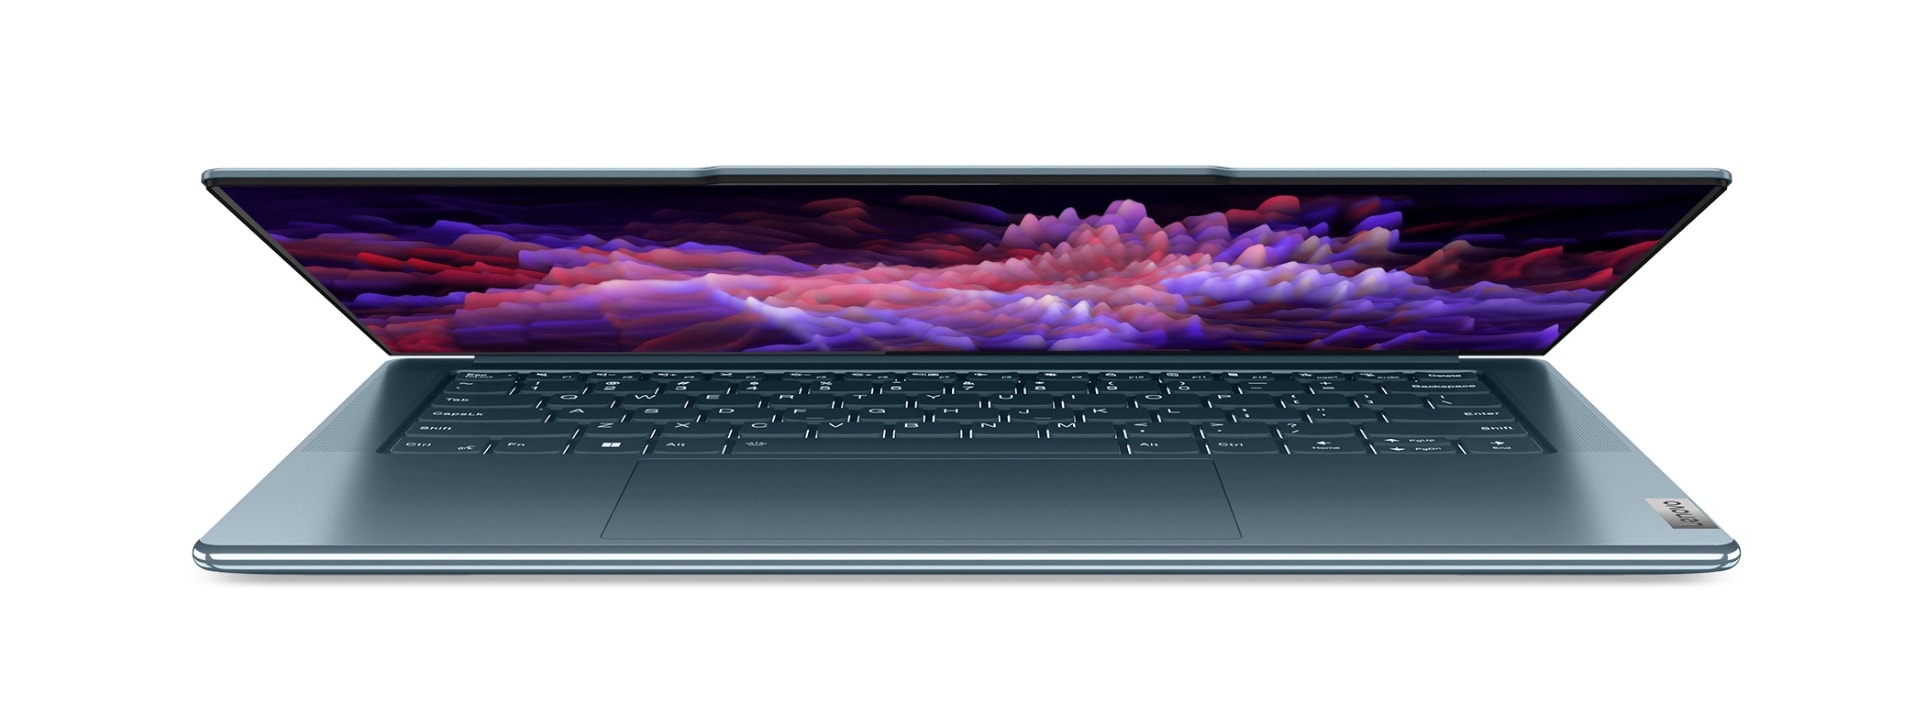 Poluotvoren Lenovo Yoga laptop snimljen spreda